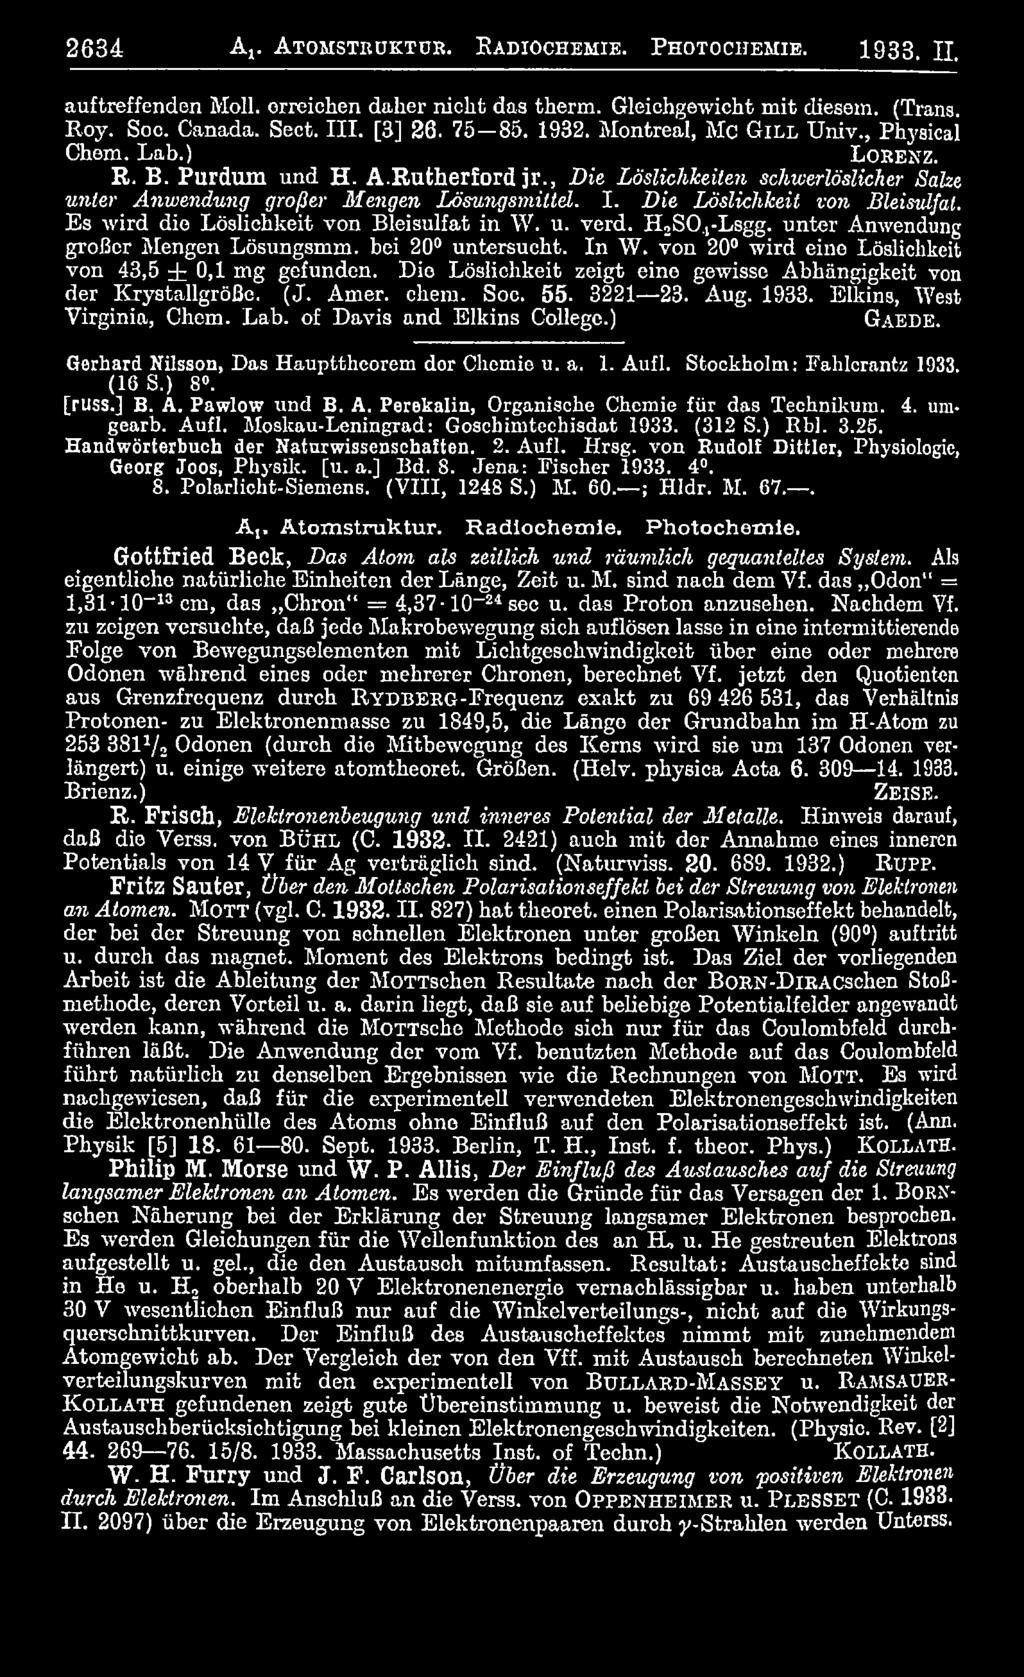 Amer. chem. Soc. 55. 3221 23. Aug. 1933. Elkins, West Virginia, Chem. Lab. of Davis and Elkins College.) Ga e d e. Gerhard Nilsson, Das Haupttheorem dor Chemie u. a. 1. Aufl.